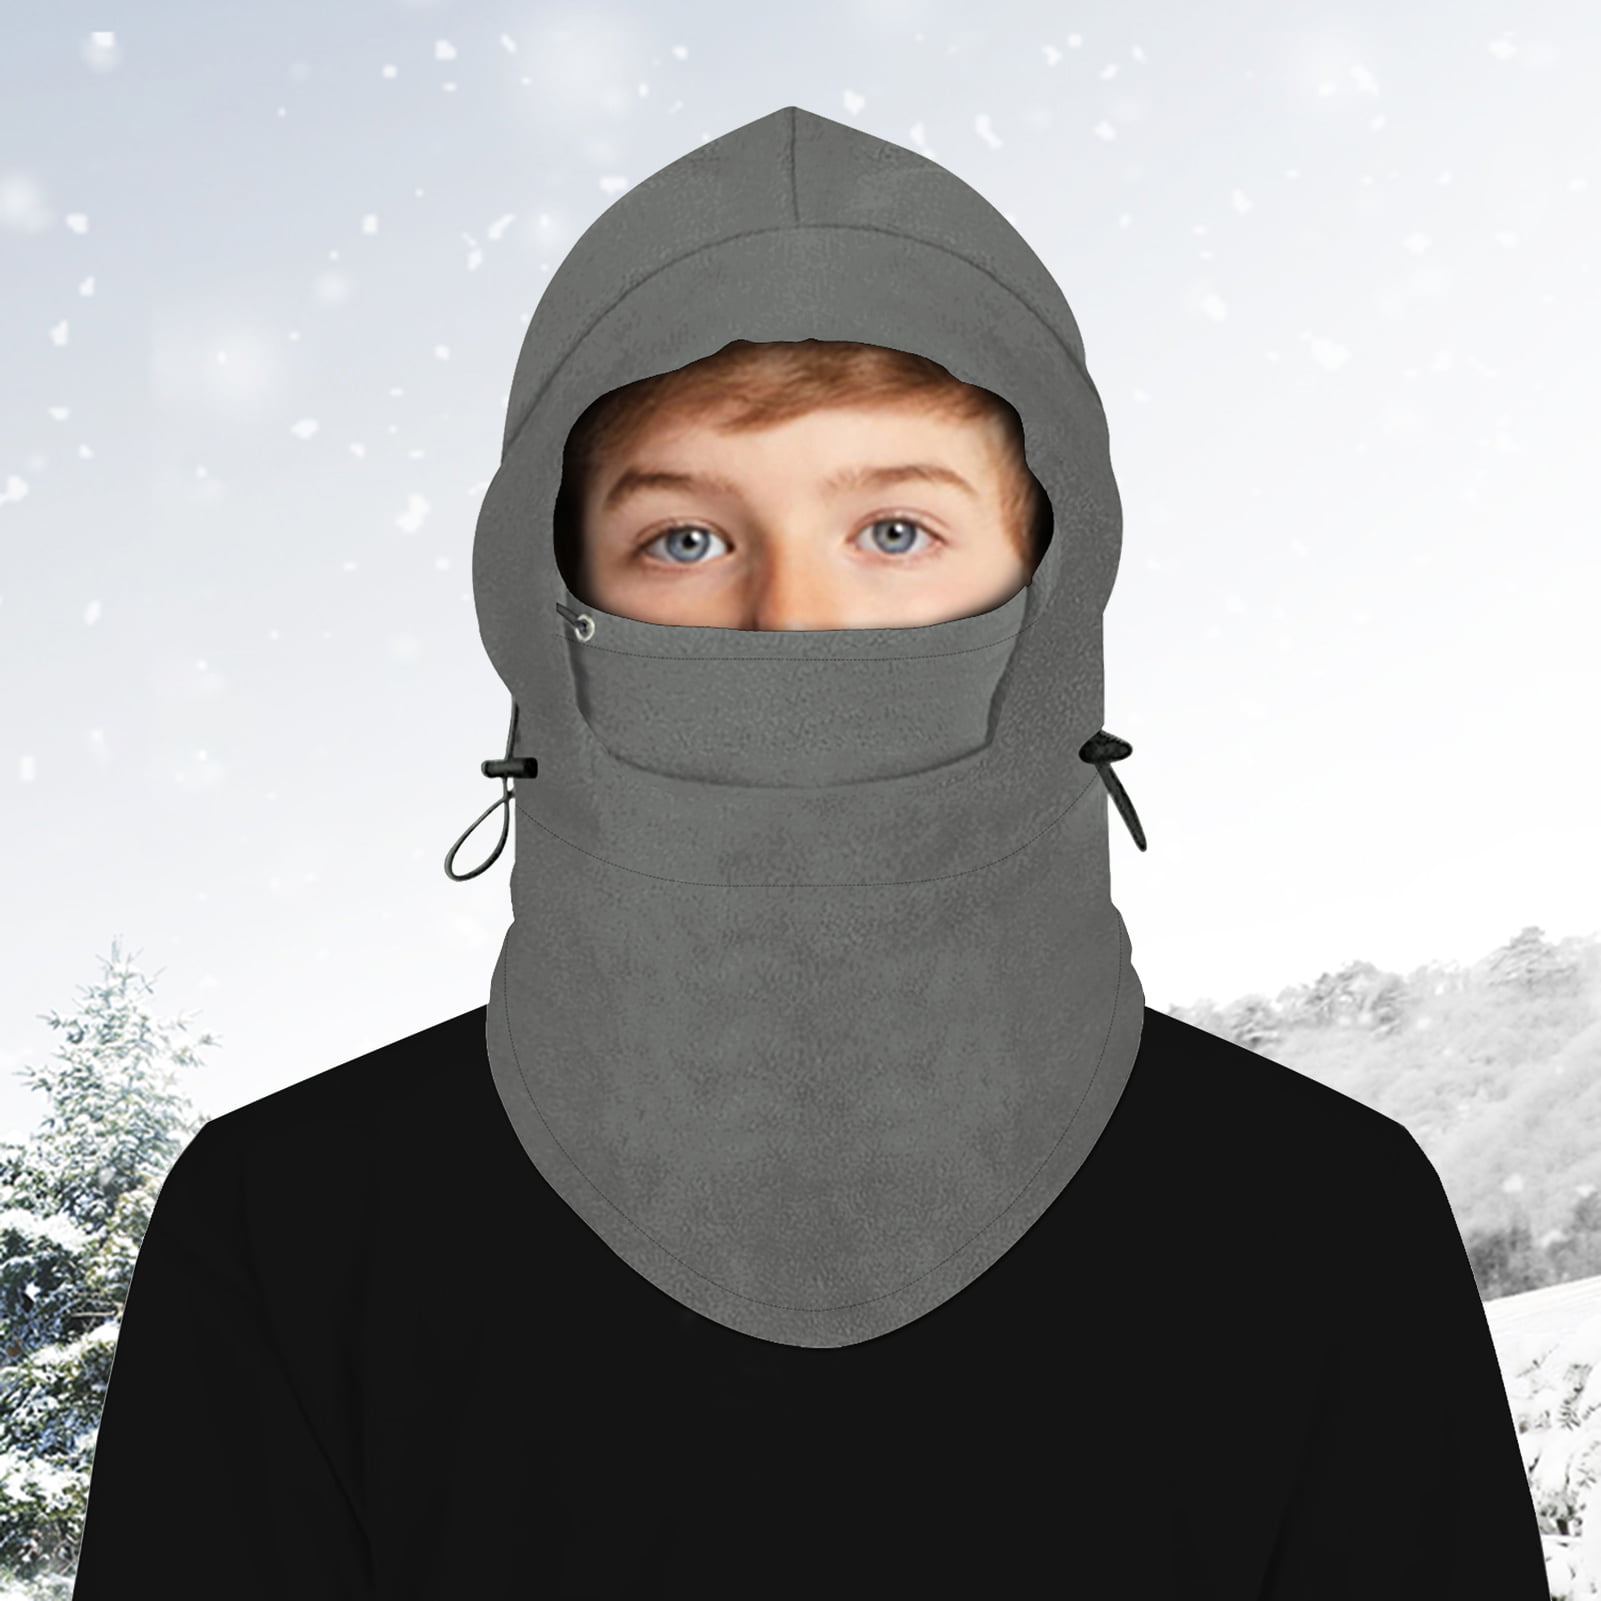 Details about   Winter Fleece Neck Warm Balaclava Hat Full Face Mask Hood Cap Windproof Ski 